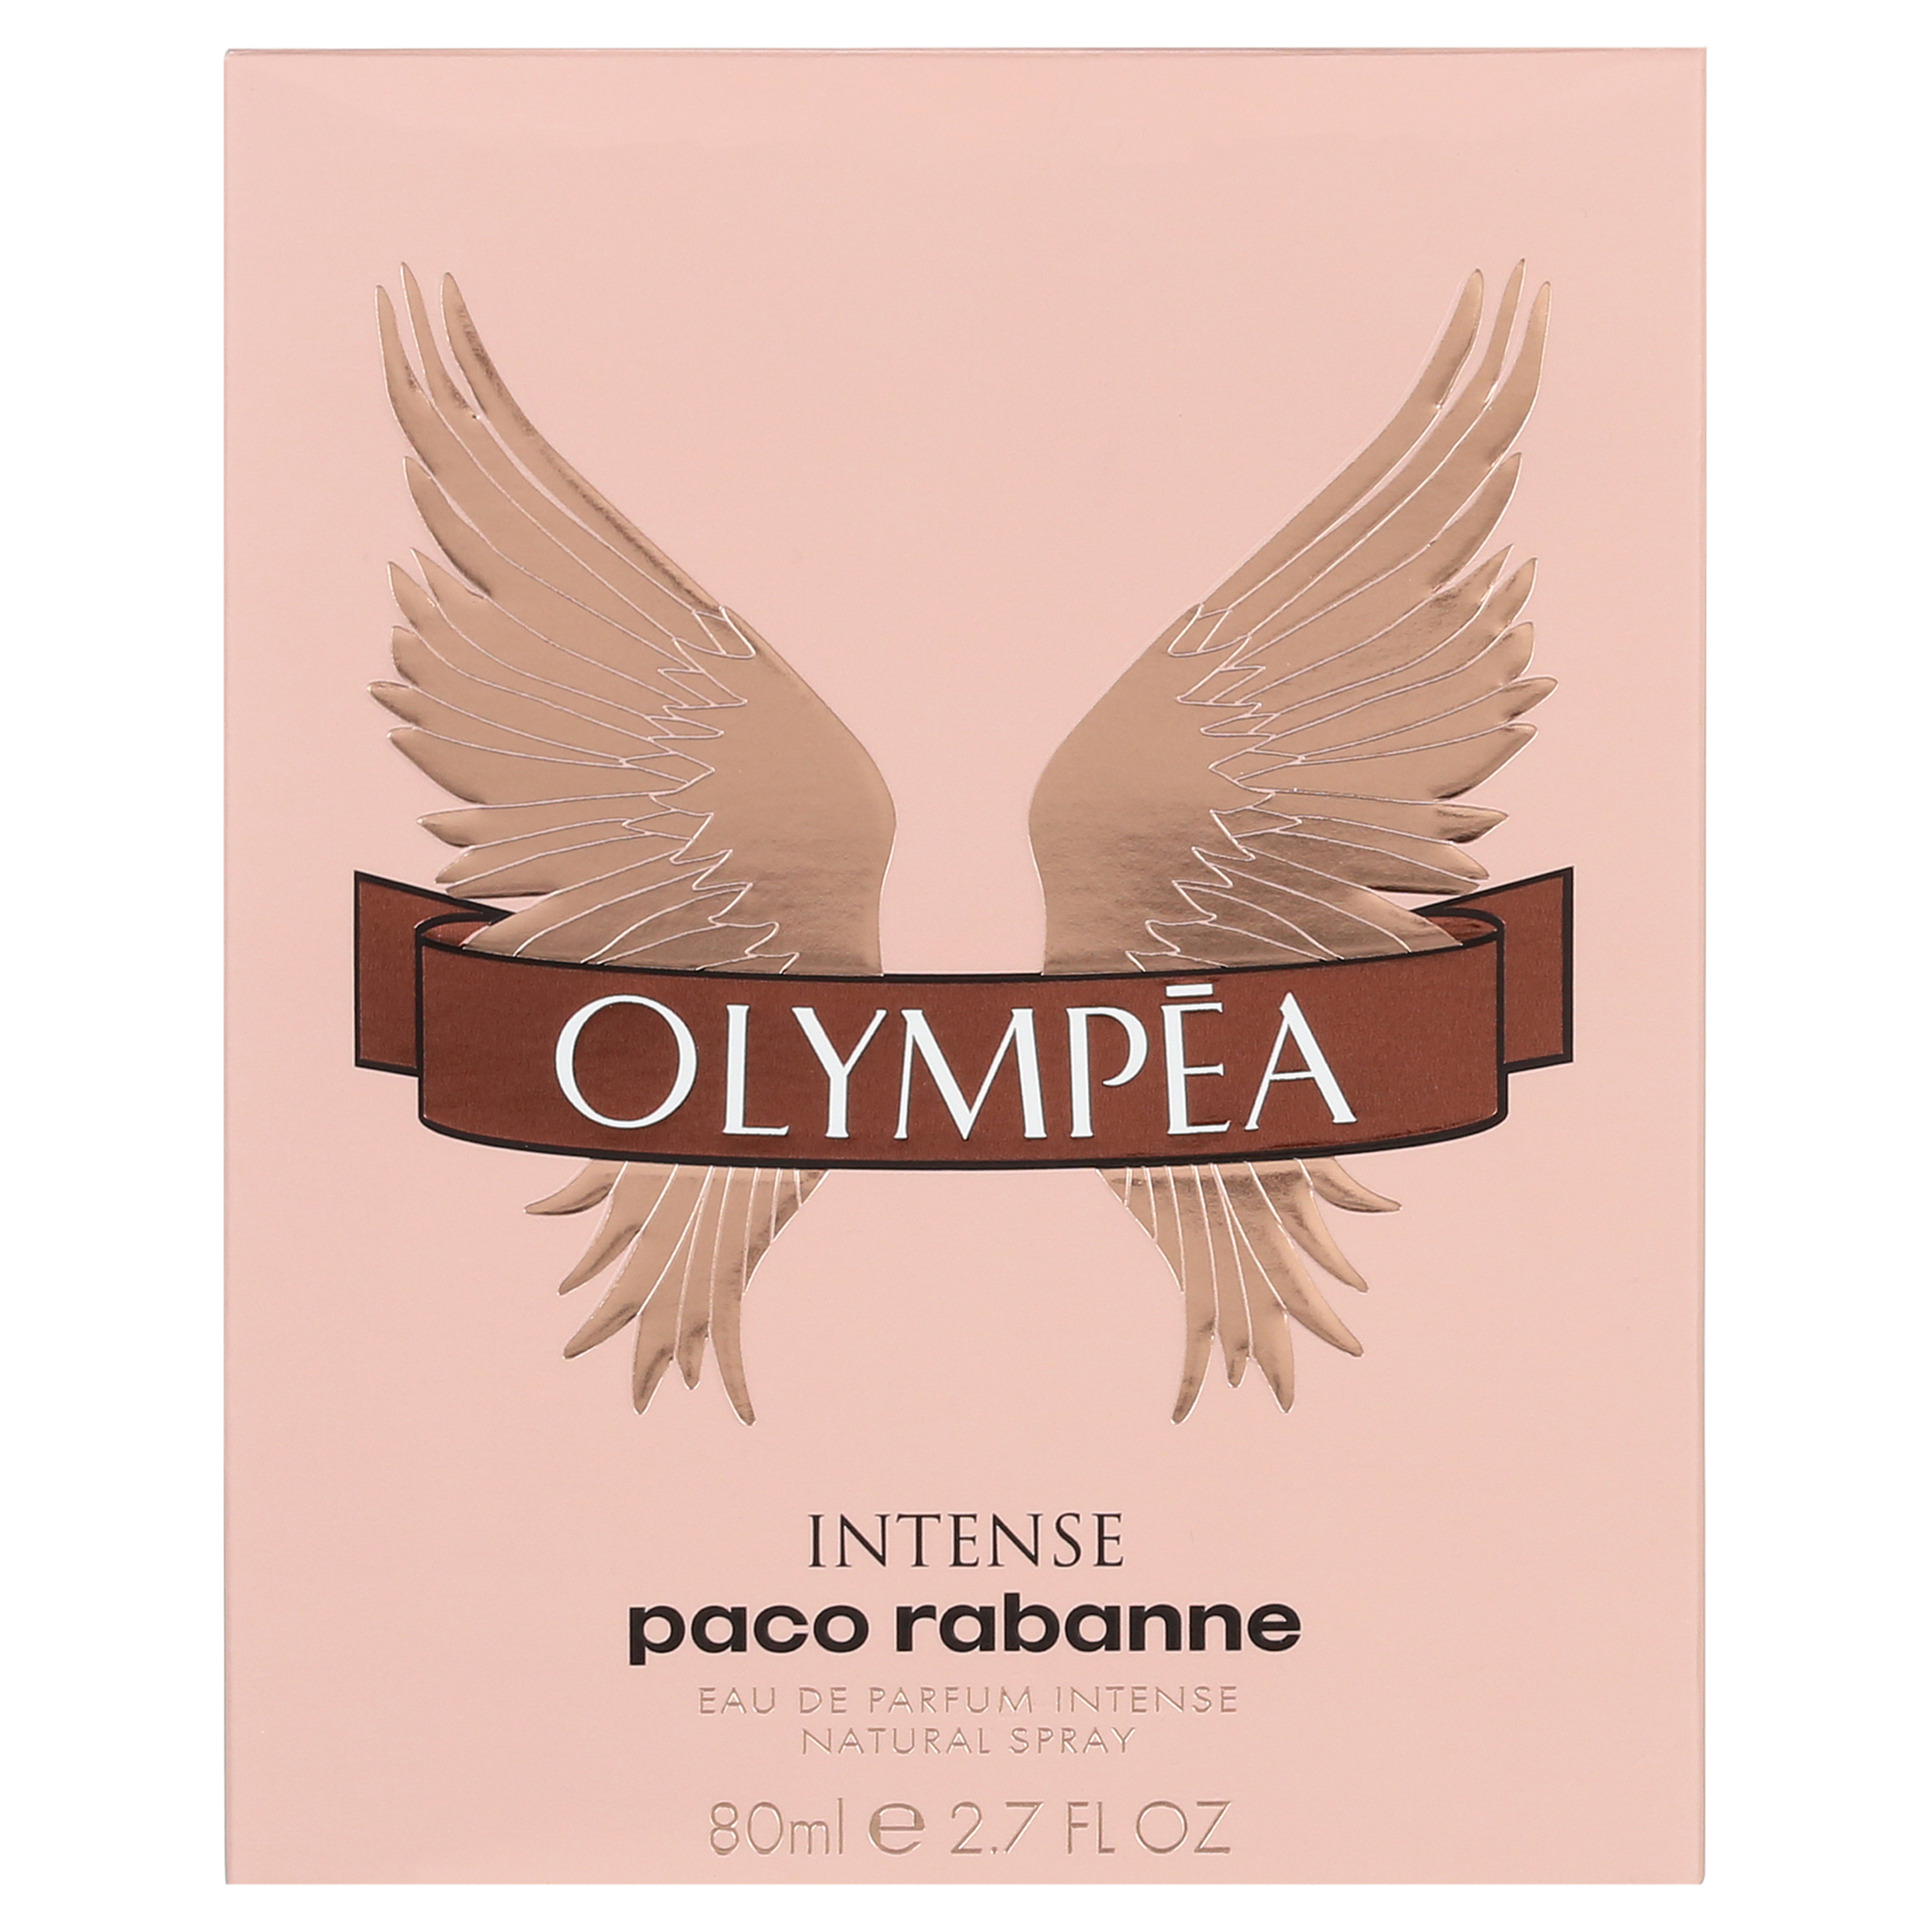 Paco Rabanne Olympea Intense Eau De Parfum Spray for Women 2.7 oz - image 8 of 9